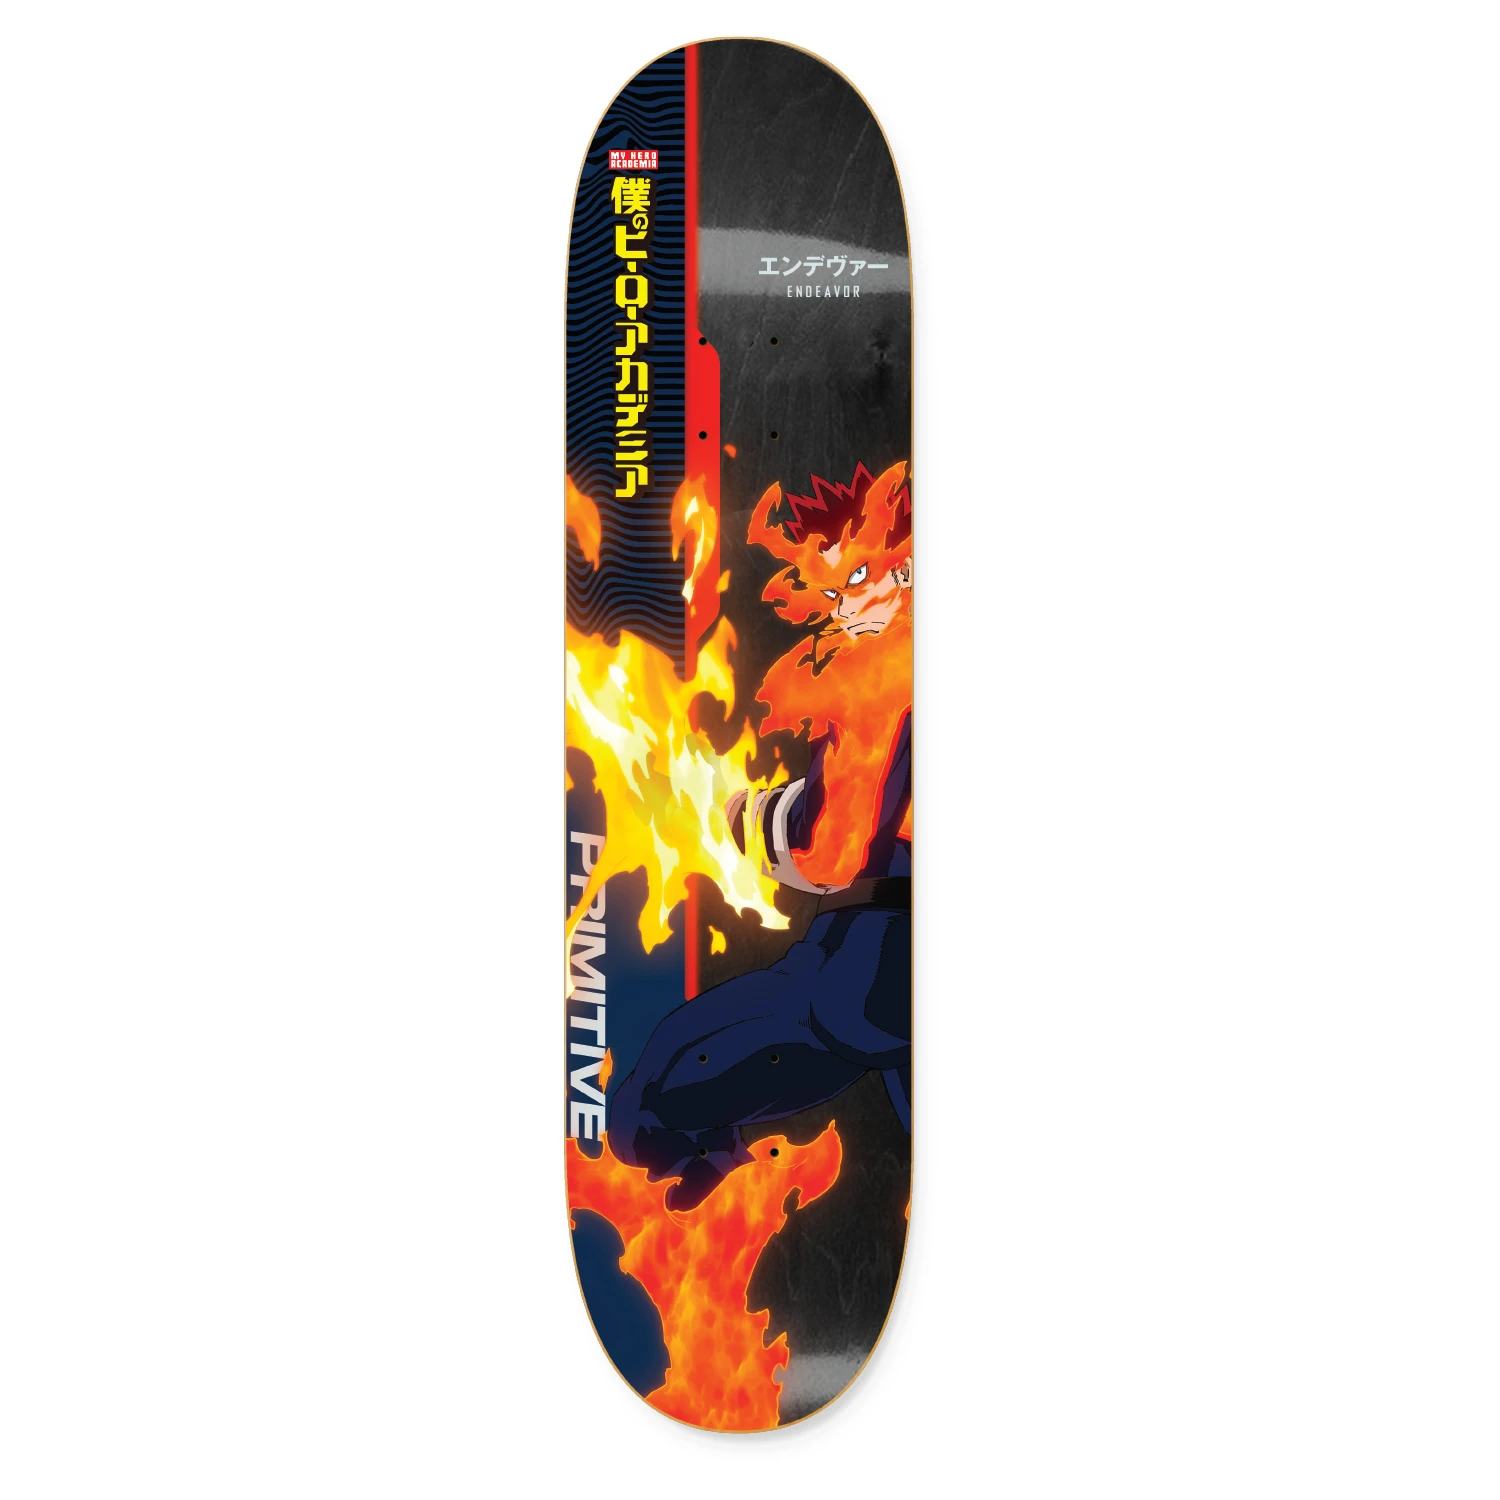 Endeavor Skateboard Deck 